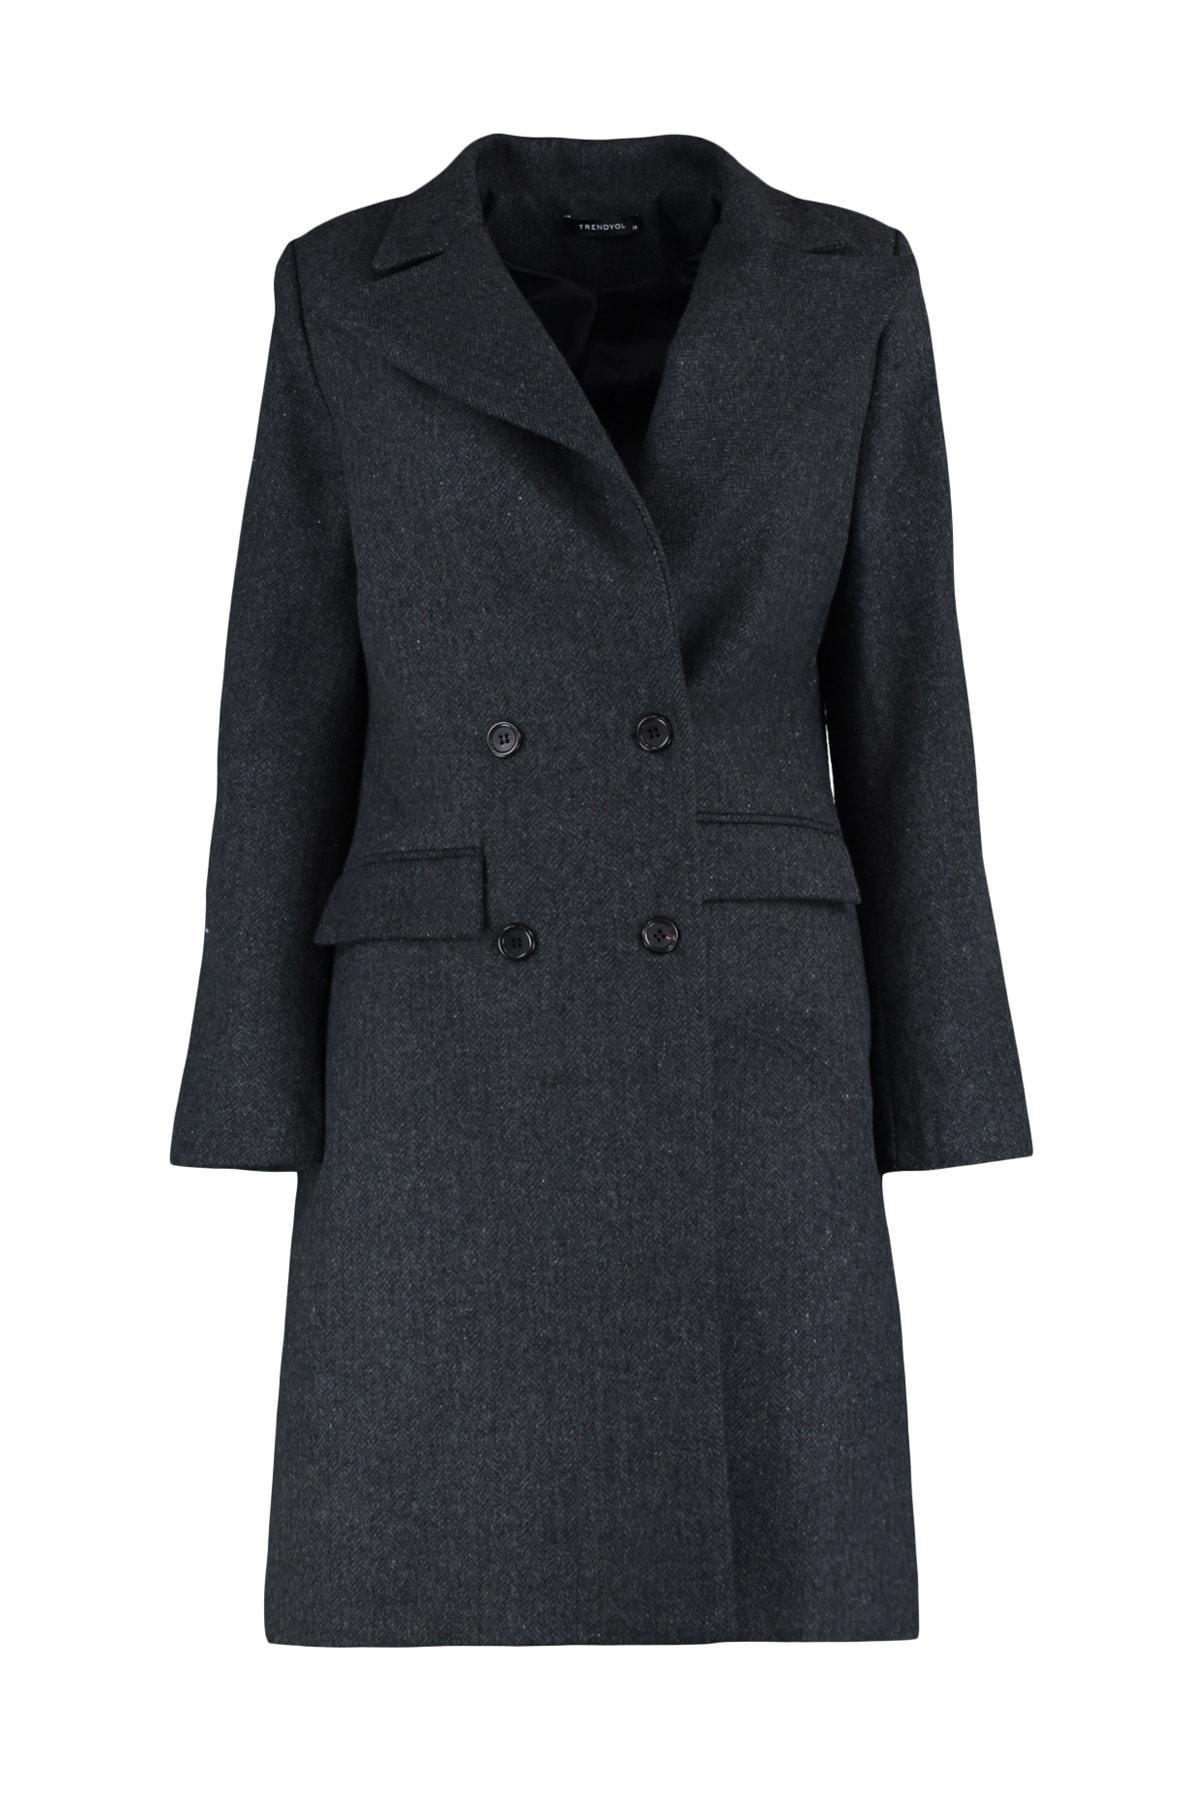 Trendyol - Black Lapel Collar Parkas Coat